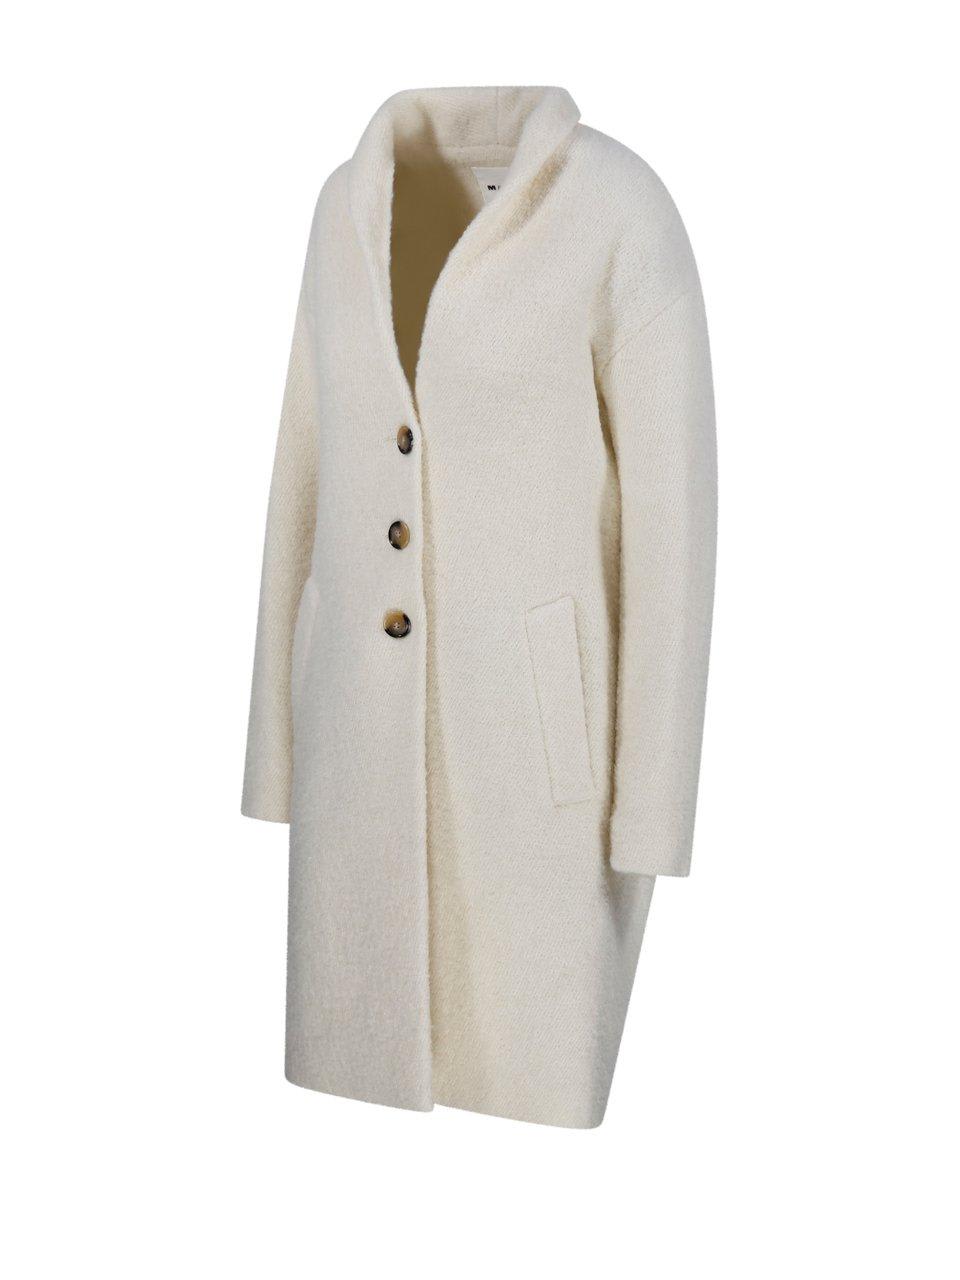 Shop Marant Etoile Single-breasted Drop Shoulder Coat In Ec Ecru